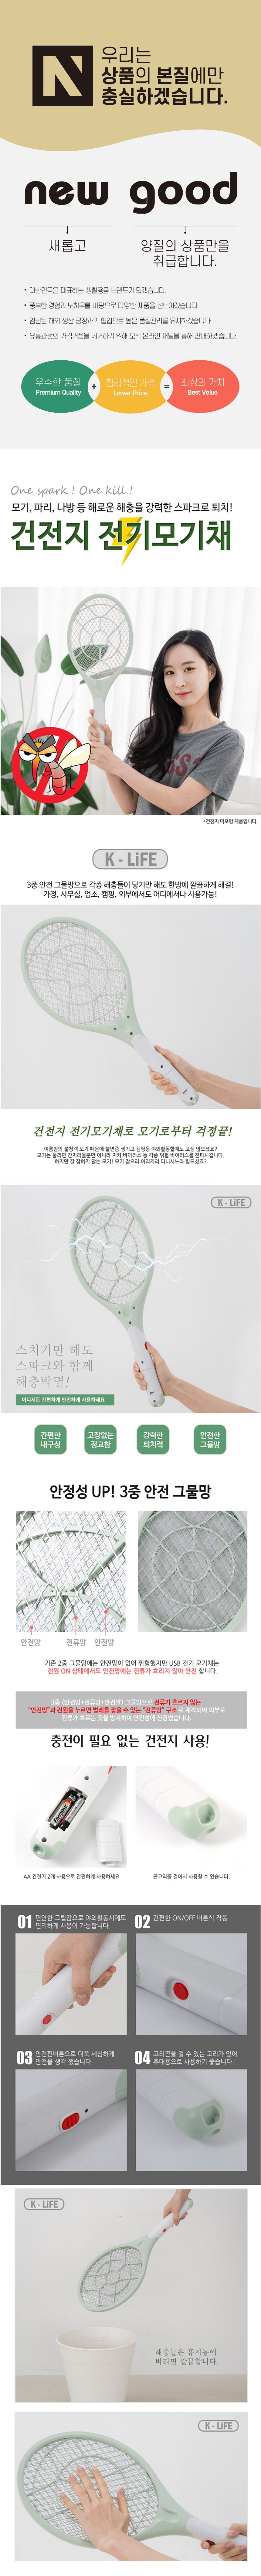 Kill electric mosquito net